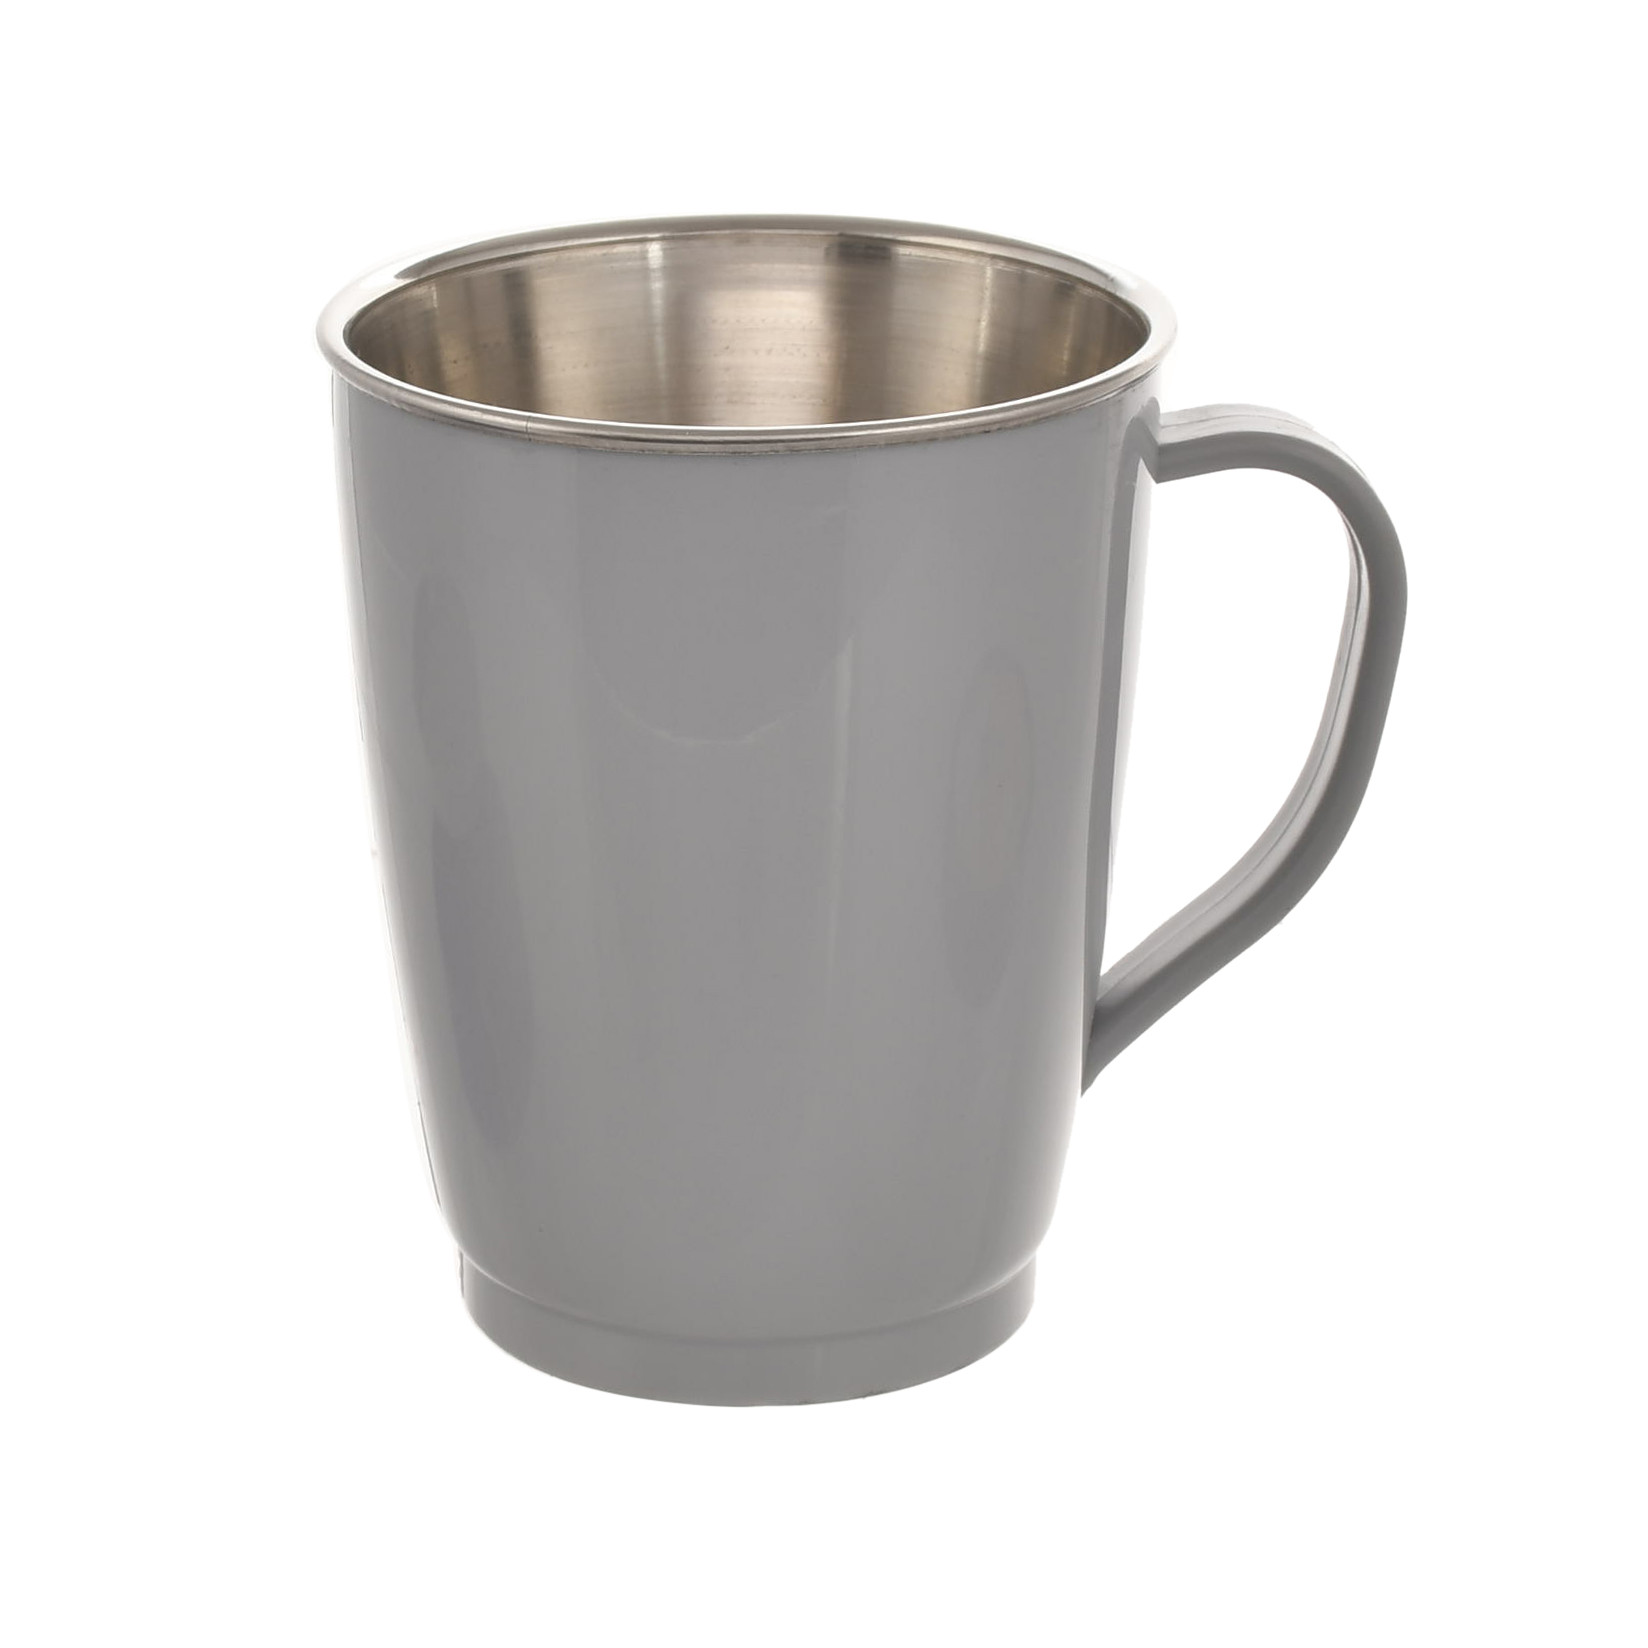 Kuber Industries Disney Printed Food Grade BPA Free Tea/Coffee Mug for Coffee Tea Cocoa, Camping Mugs with Lid, Pack of 6 (Light Grey & Cream & Grey)